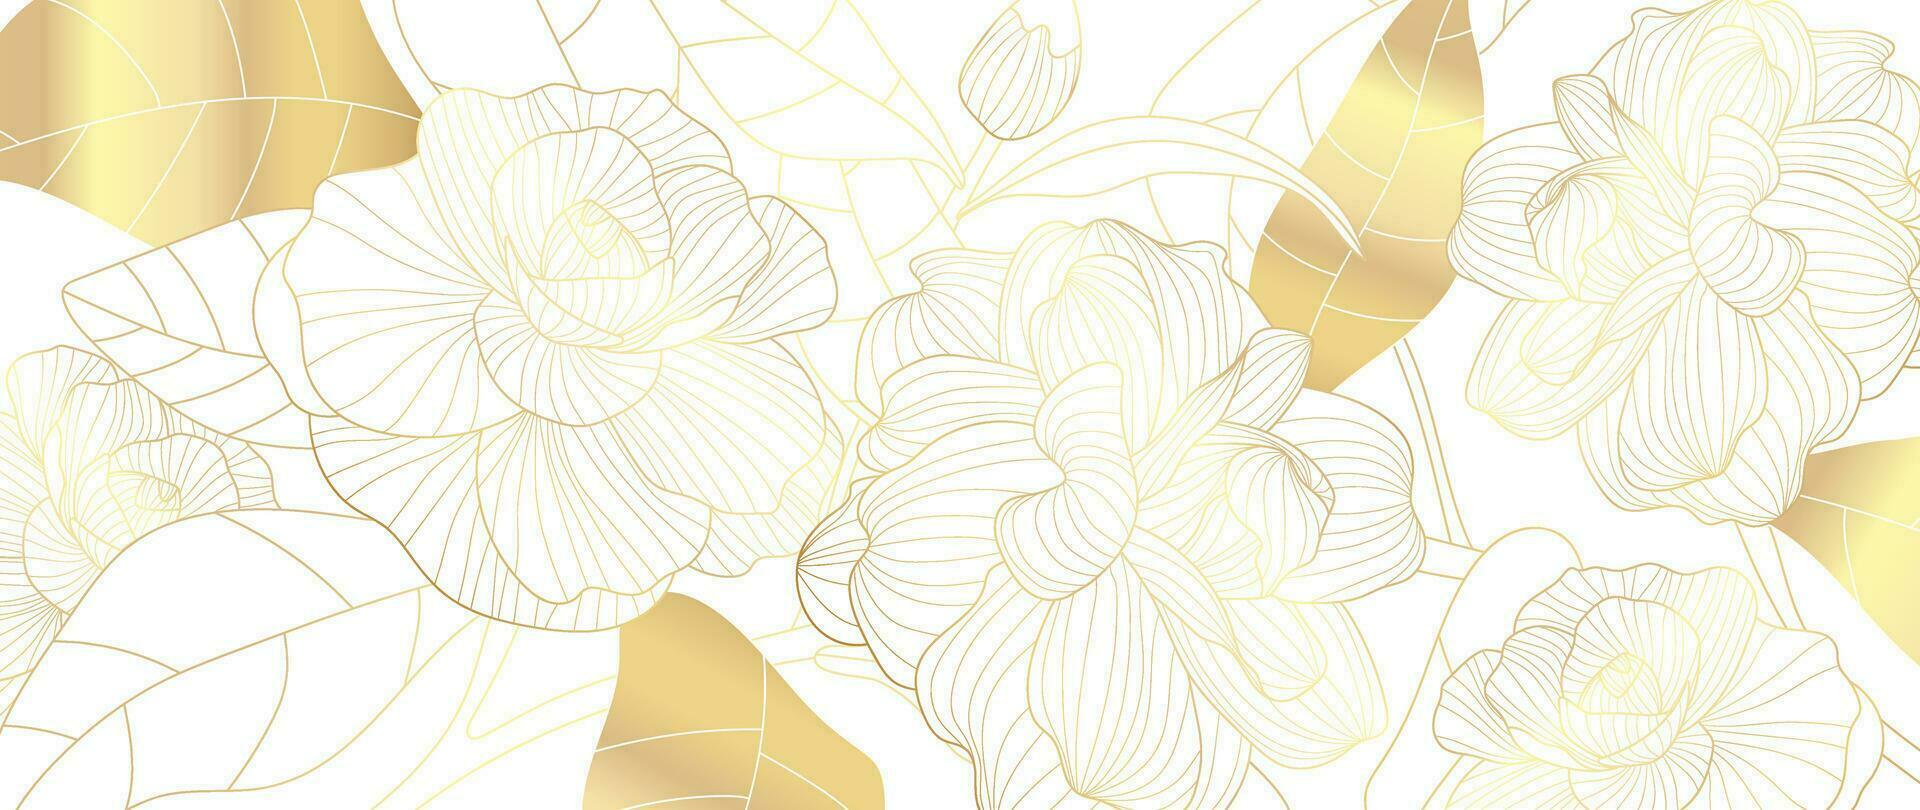 lyx gyllene reste sig blomma linje konst bakgrund vektor. naturlig botanisk elegant blomma med guld linje konst. design illustration för dekoration, vägg dekor, tapet, omslag, baner, affisch, kort. vektor